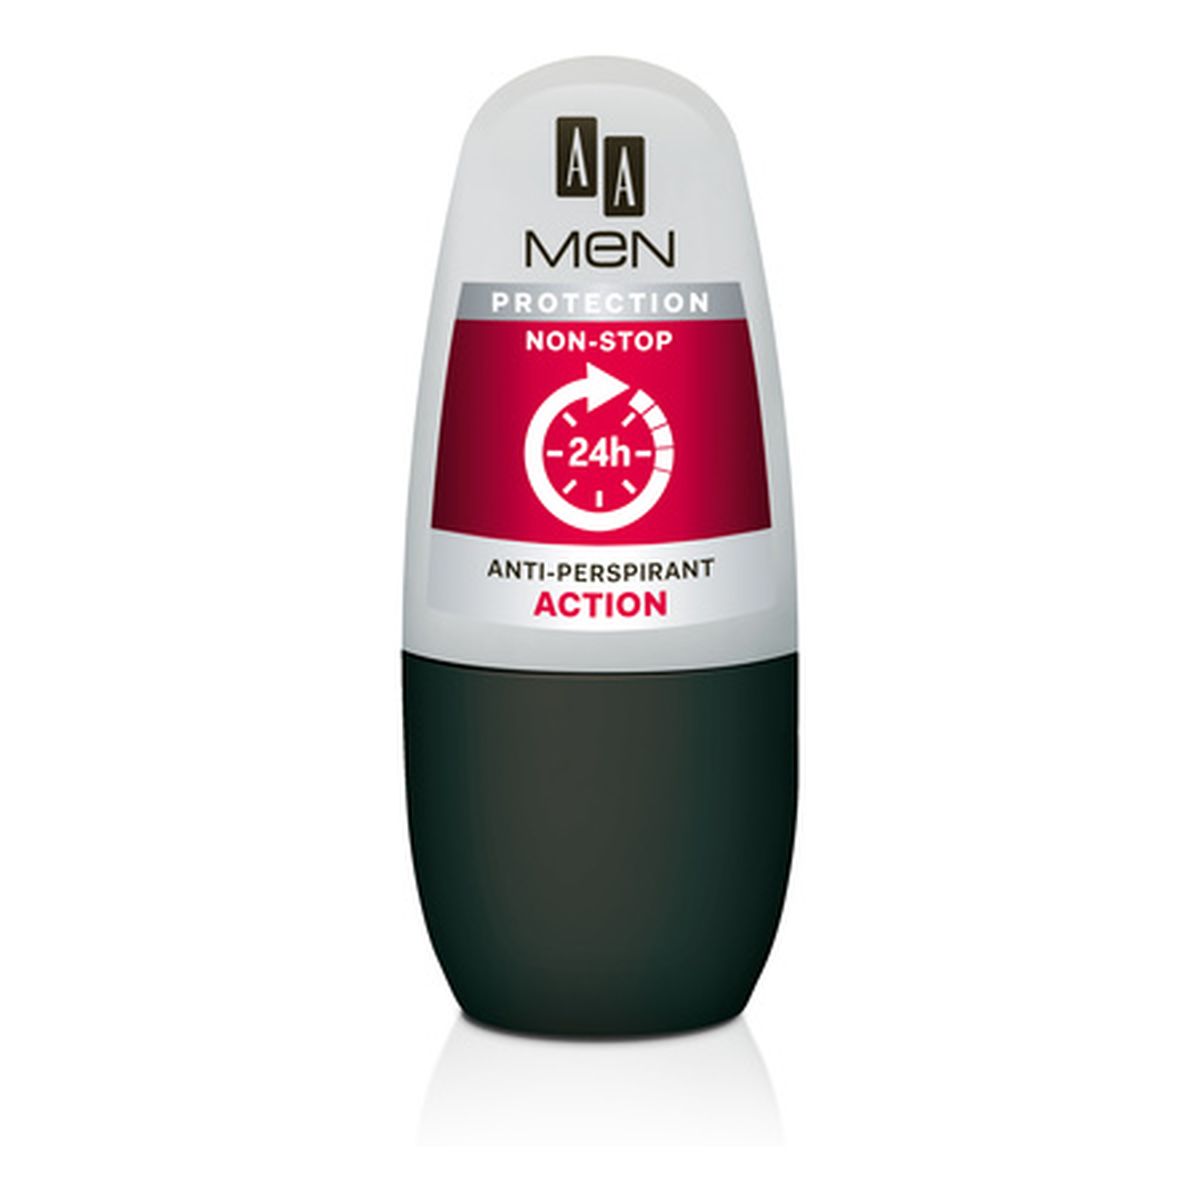 AA Men Non-Stop 24h Antyperspirant Dla Mężczyzn Action 50ml